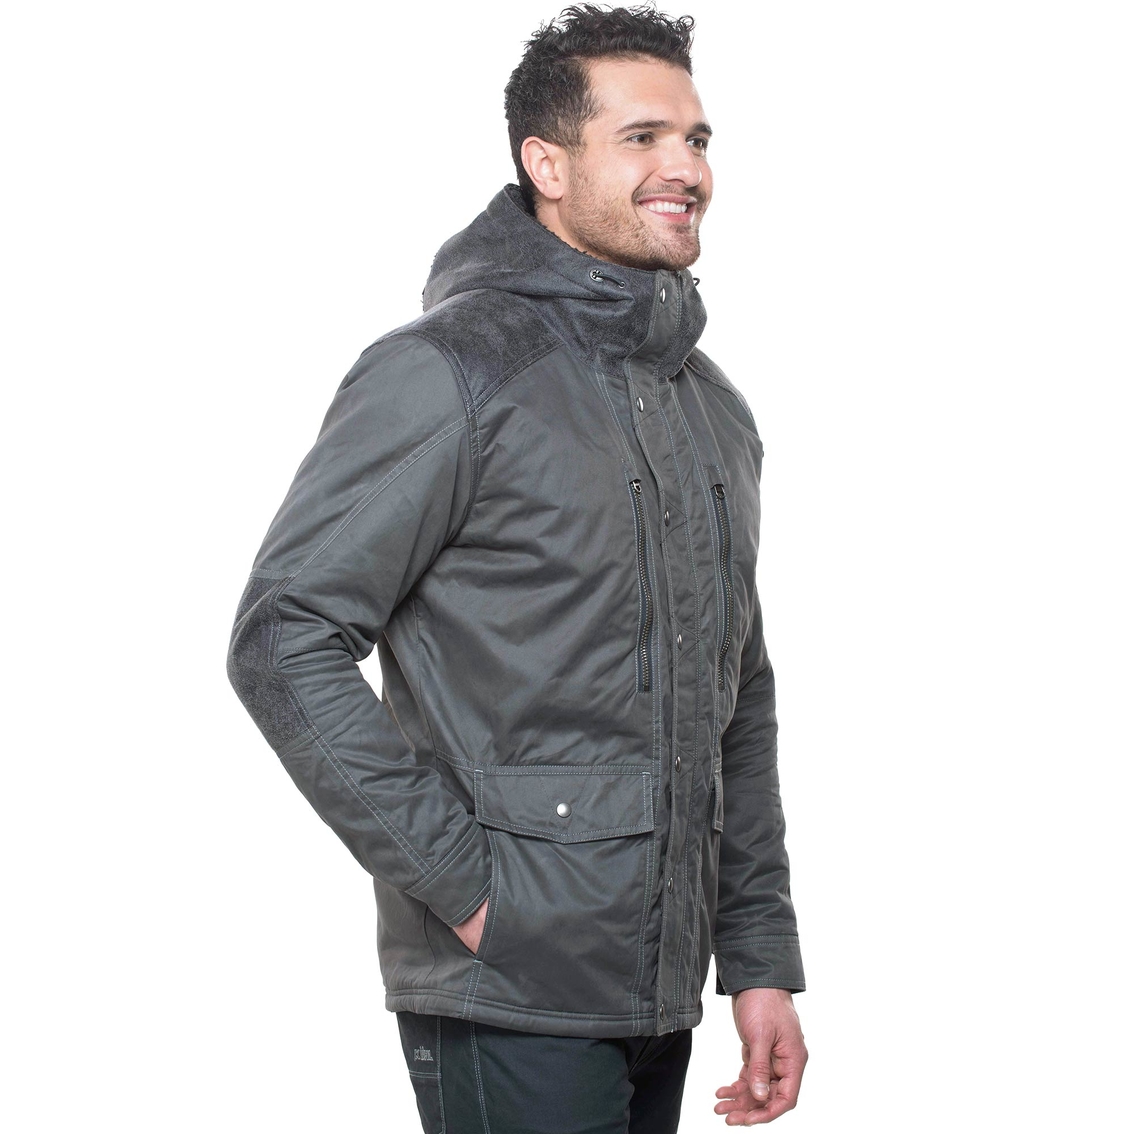 Kuhl Arktik Jacket | Jackets | Clothing & Accessories | Shop The Exchange